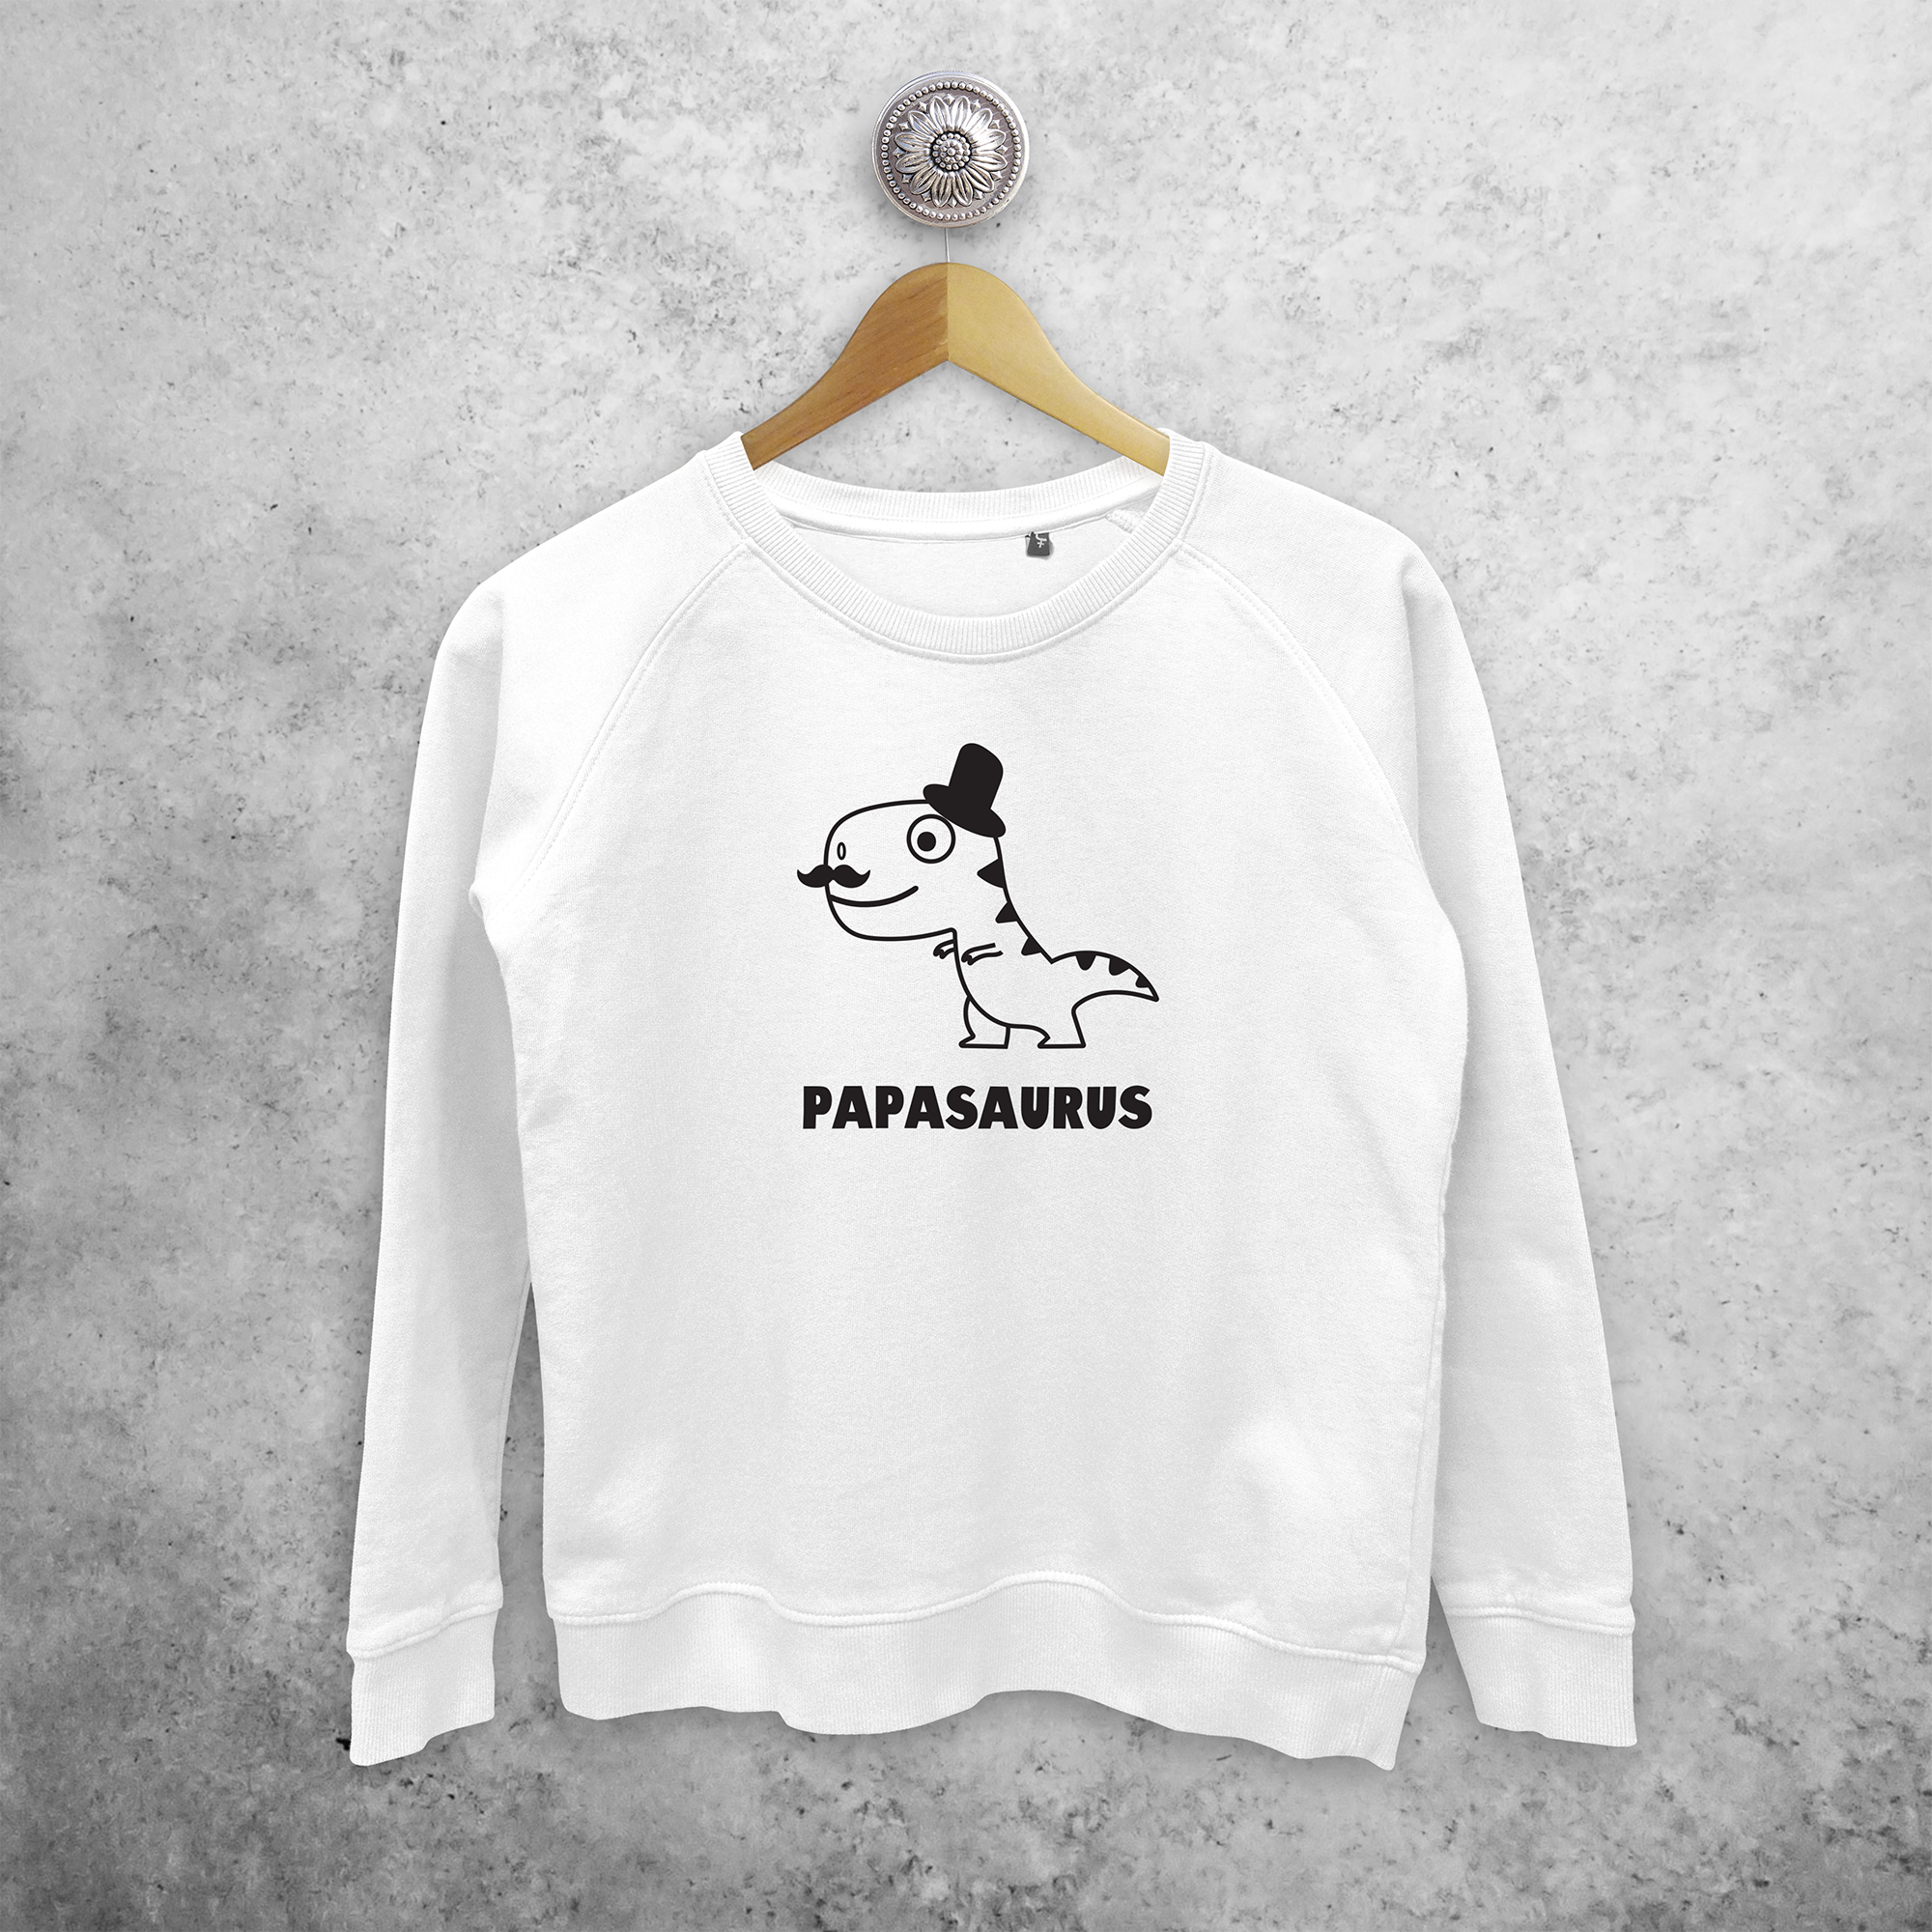 'Papasaurus' sweater